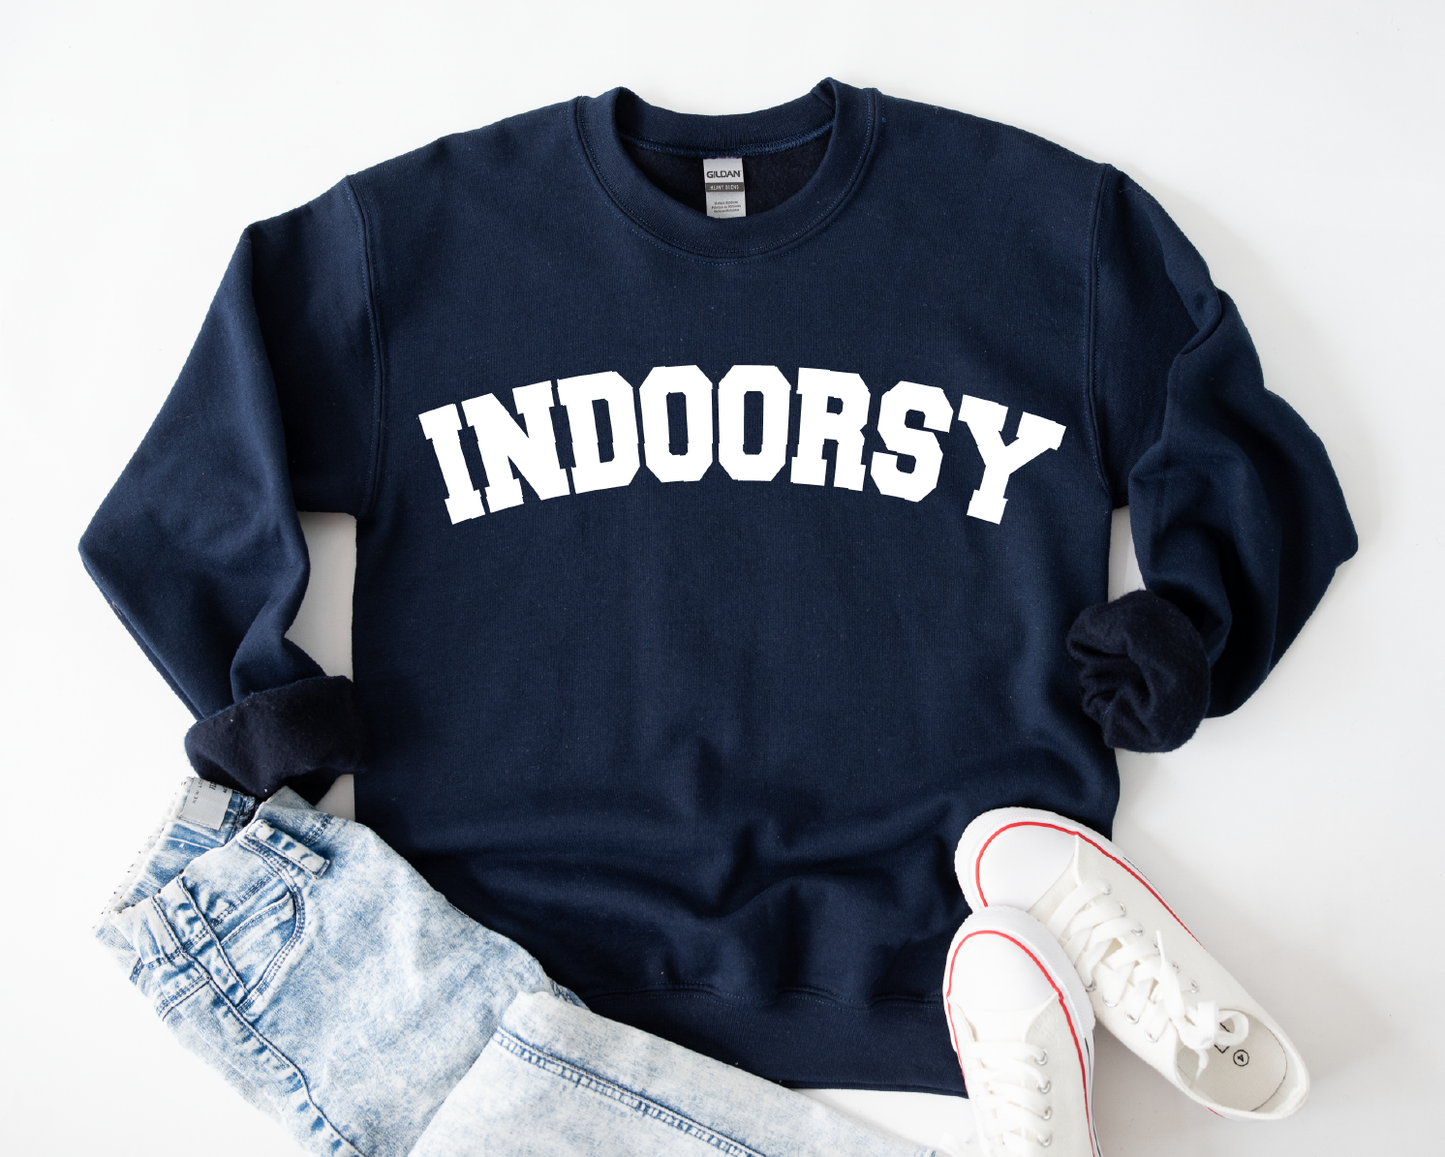 Indoorsy: Small